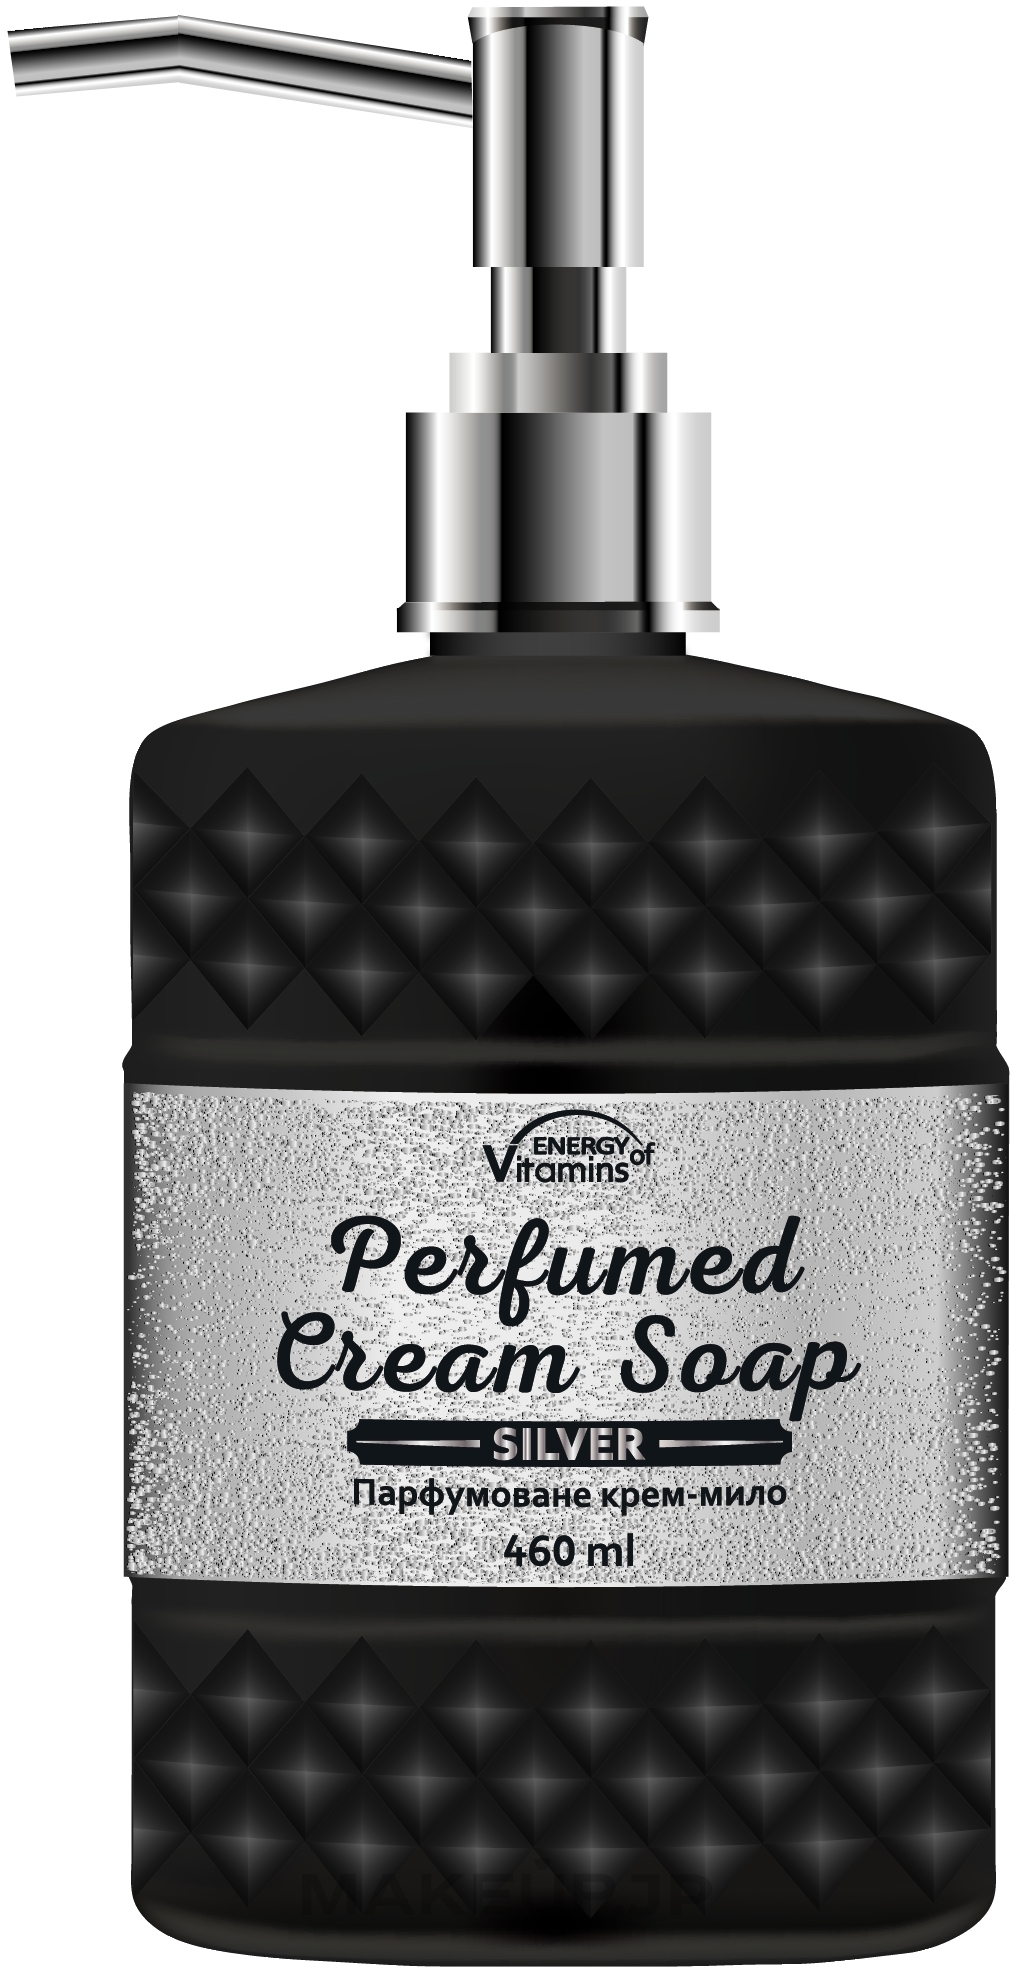 Perfumed Cream Soap "Silver" - Energy of Vitamins Perfumed Cream Soap — photo 460 ml